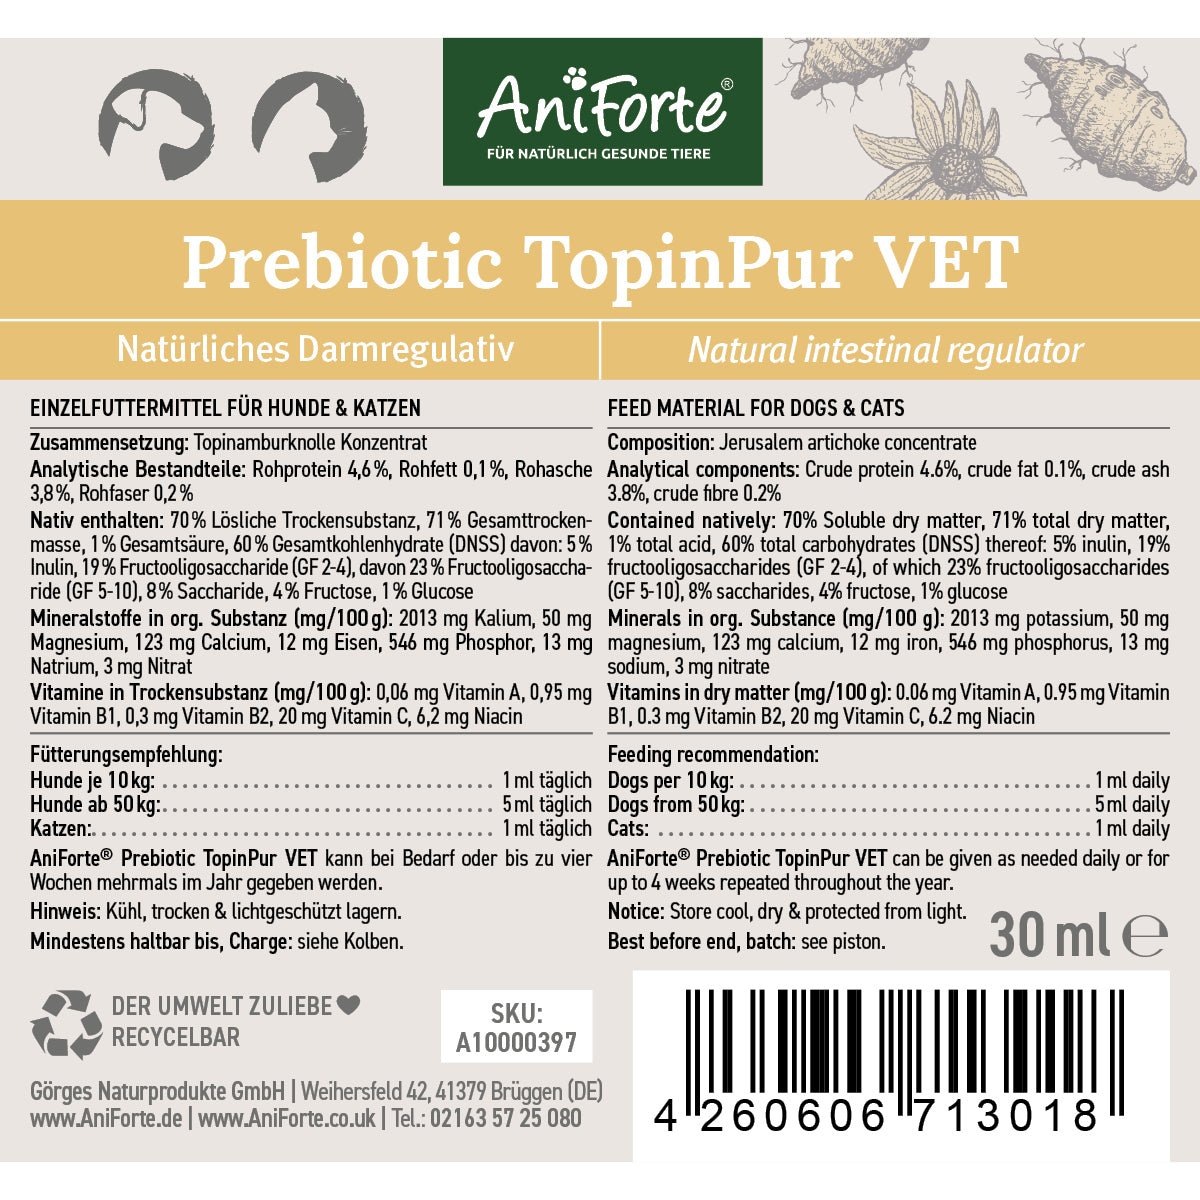 Prebiotic Jerusalem Artichoke Concentrate for Cats and Dogs - 30 ml - Natural intestinal regulator - AniForte UK